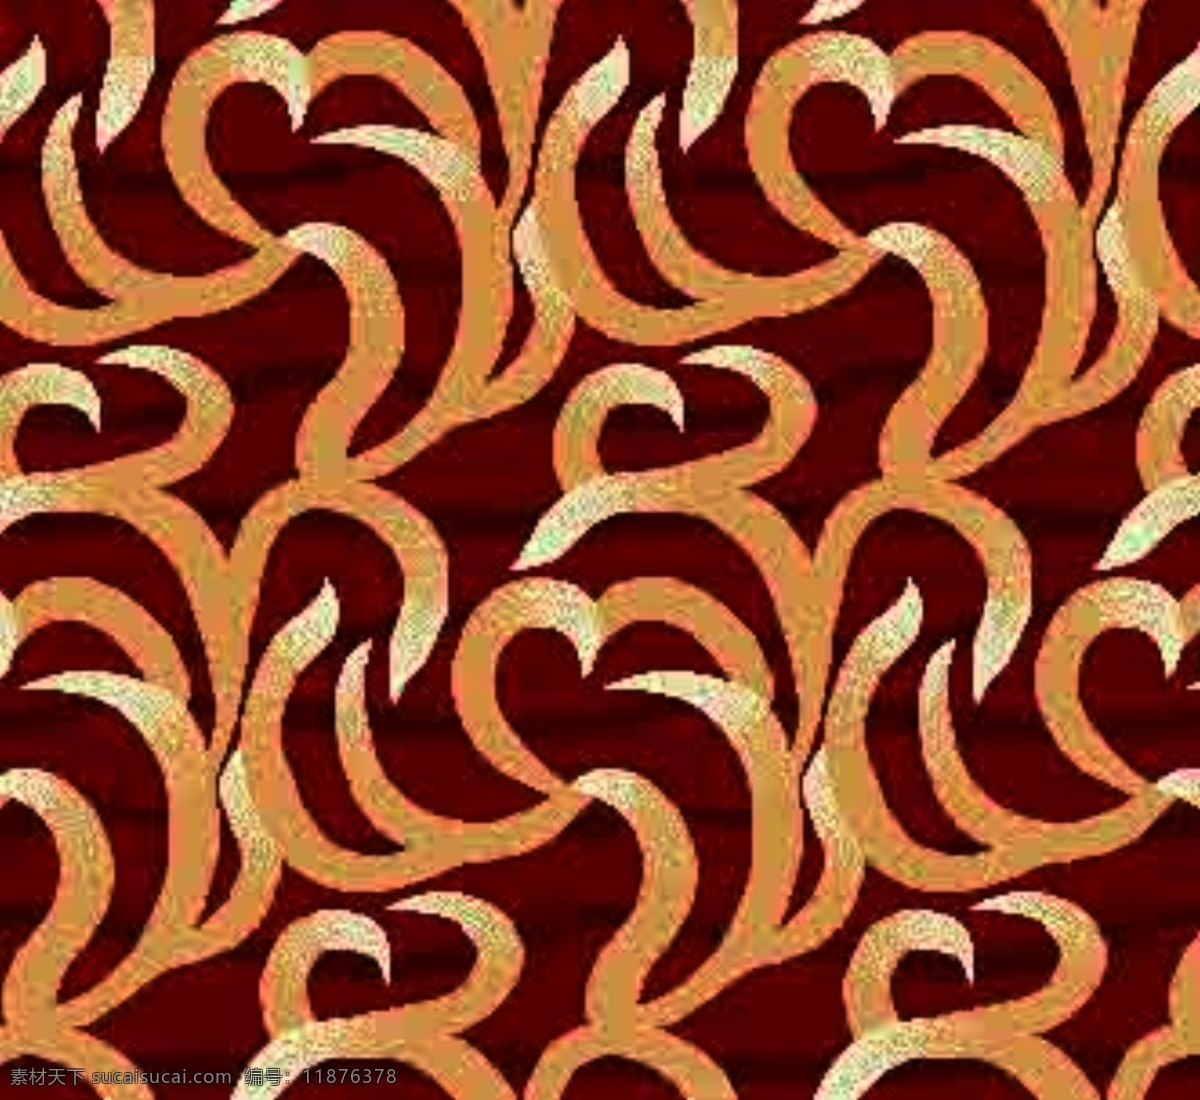 vray 地毯 材质 max9 布料 红色 黄色花纹 有贴图 3d模型素材 材质贴图